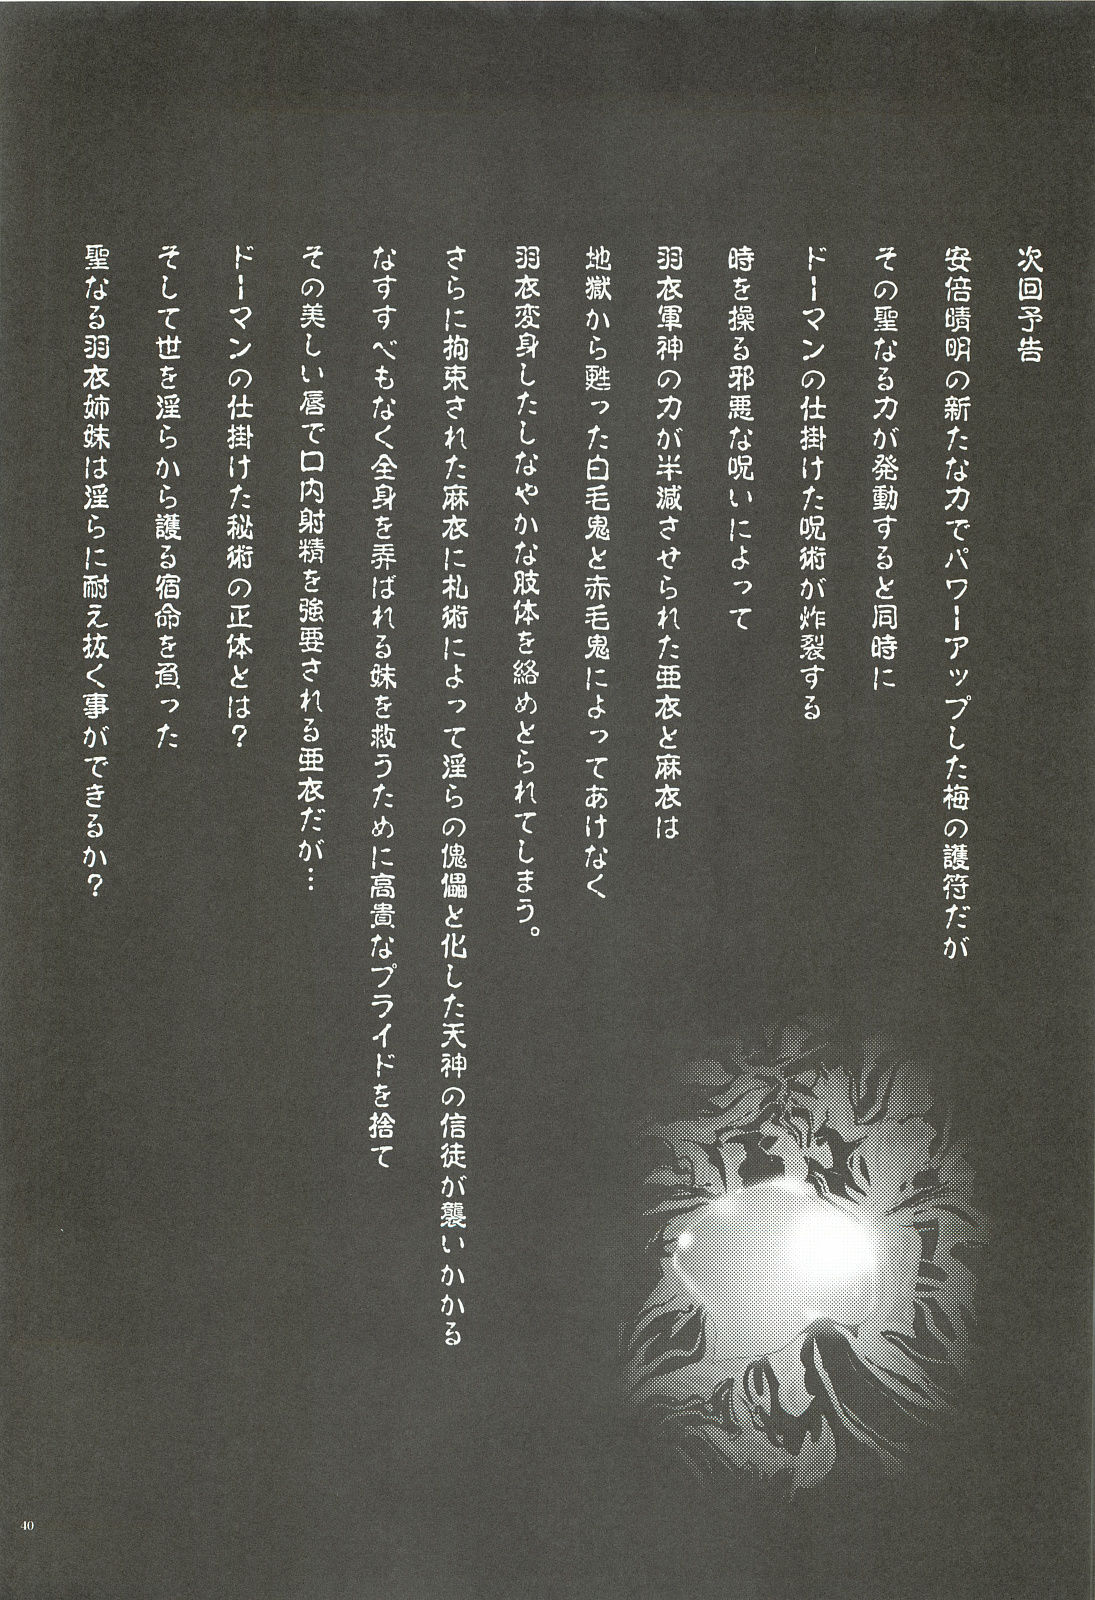 [Senbon Torii] FallenXXangeL 4 Inka no Ai Gekan (Inju Seisen Twin Angels) [English] [SaHa] [千本トリイ] FallenXXangeL4 淫渦の亜衣 下巻 (淫獣聖戦 ツインエンジェル) [英訳]